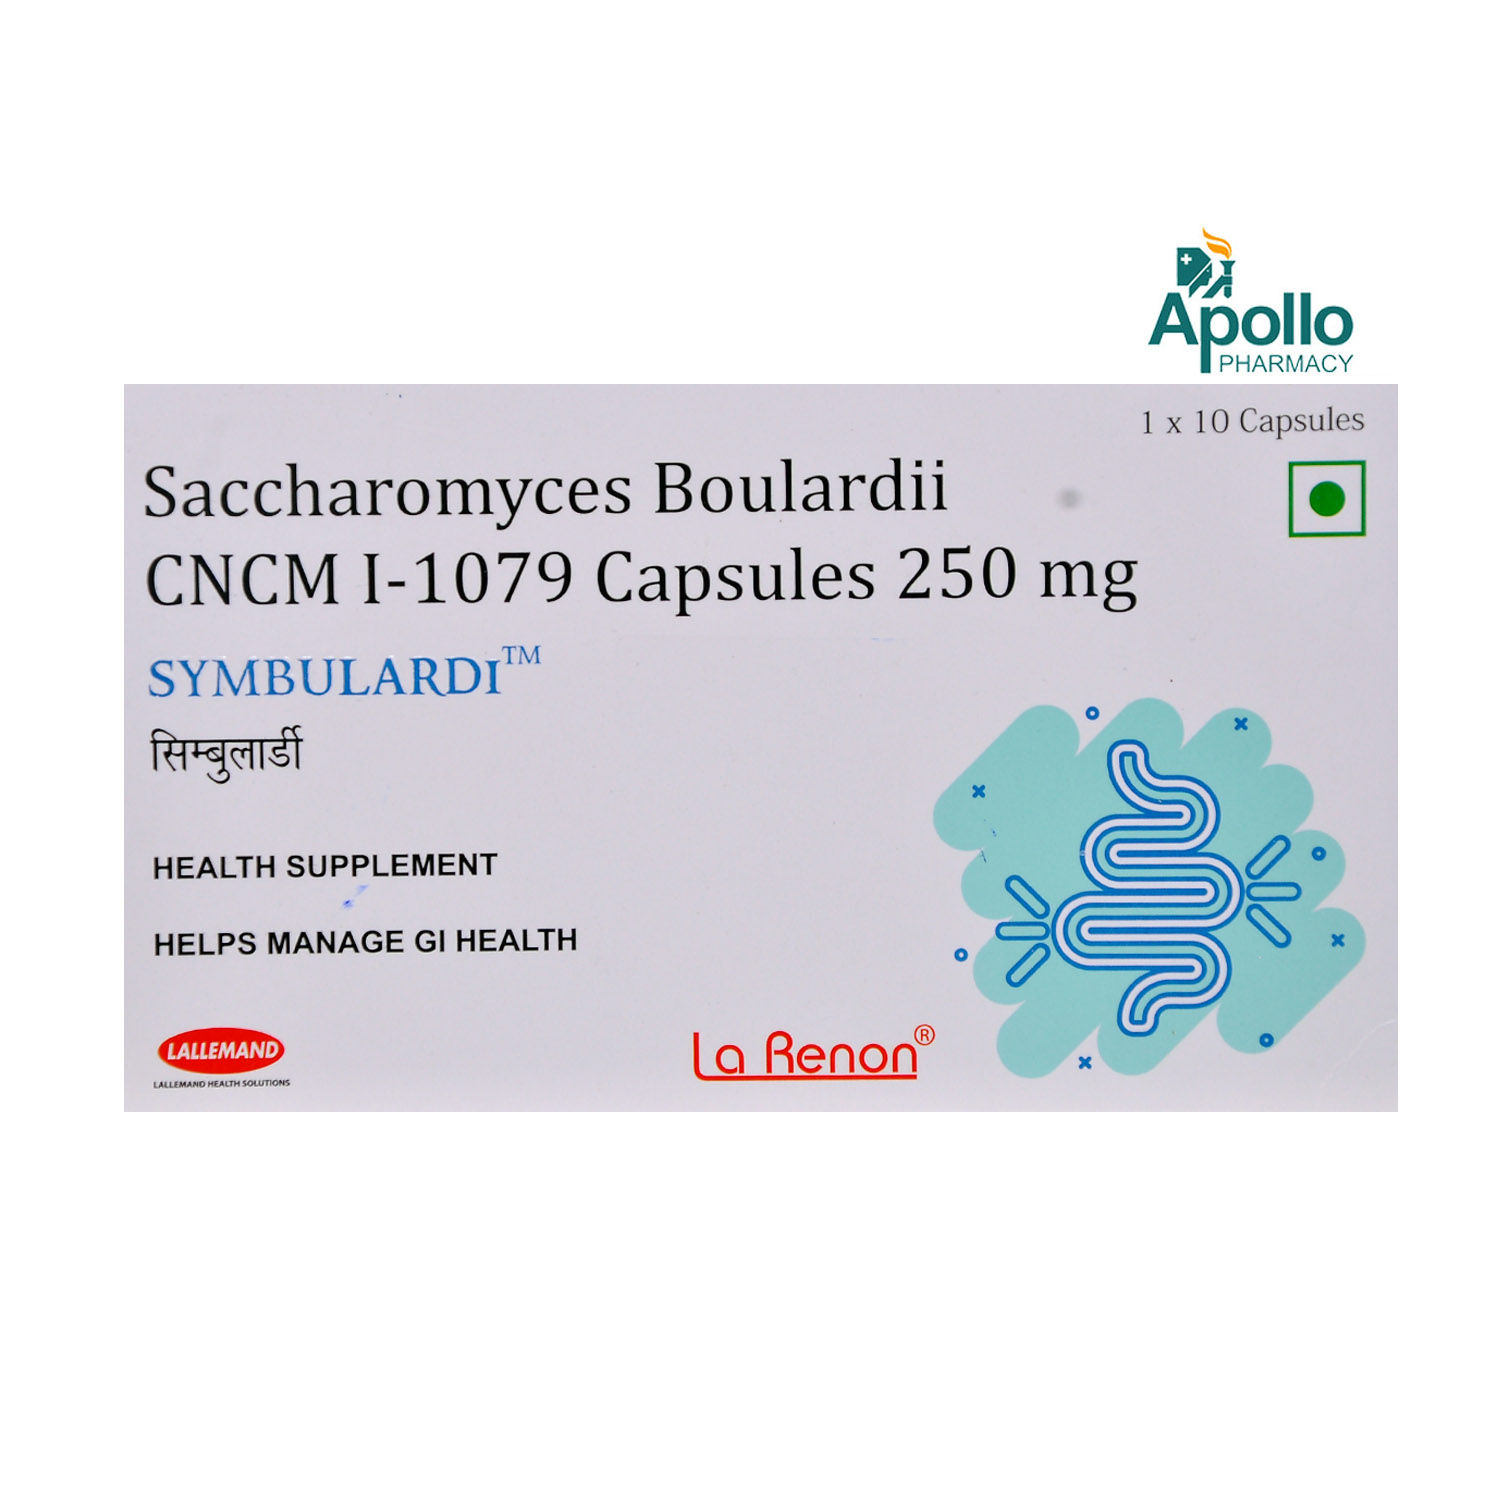 Saccharomyces Boulardii: Uses, Benefits, Side Effects